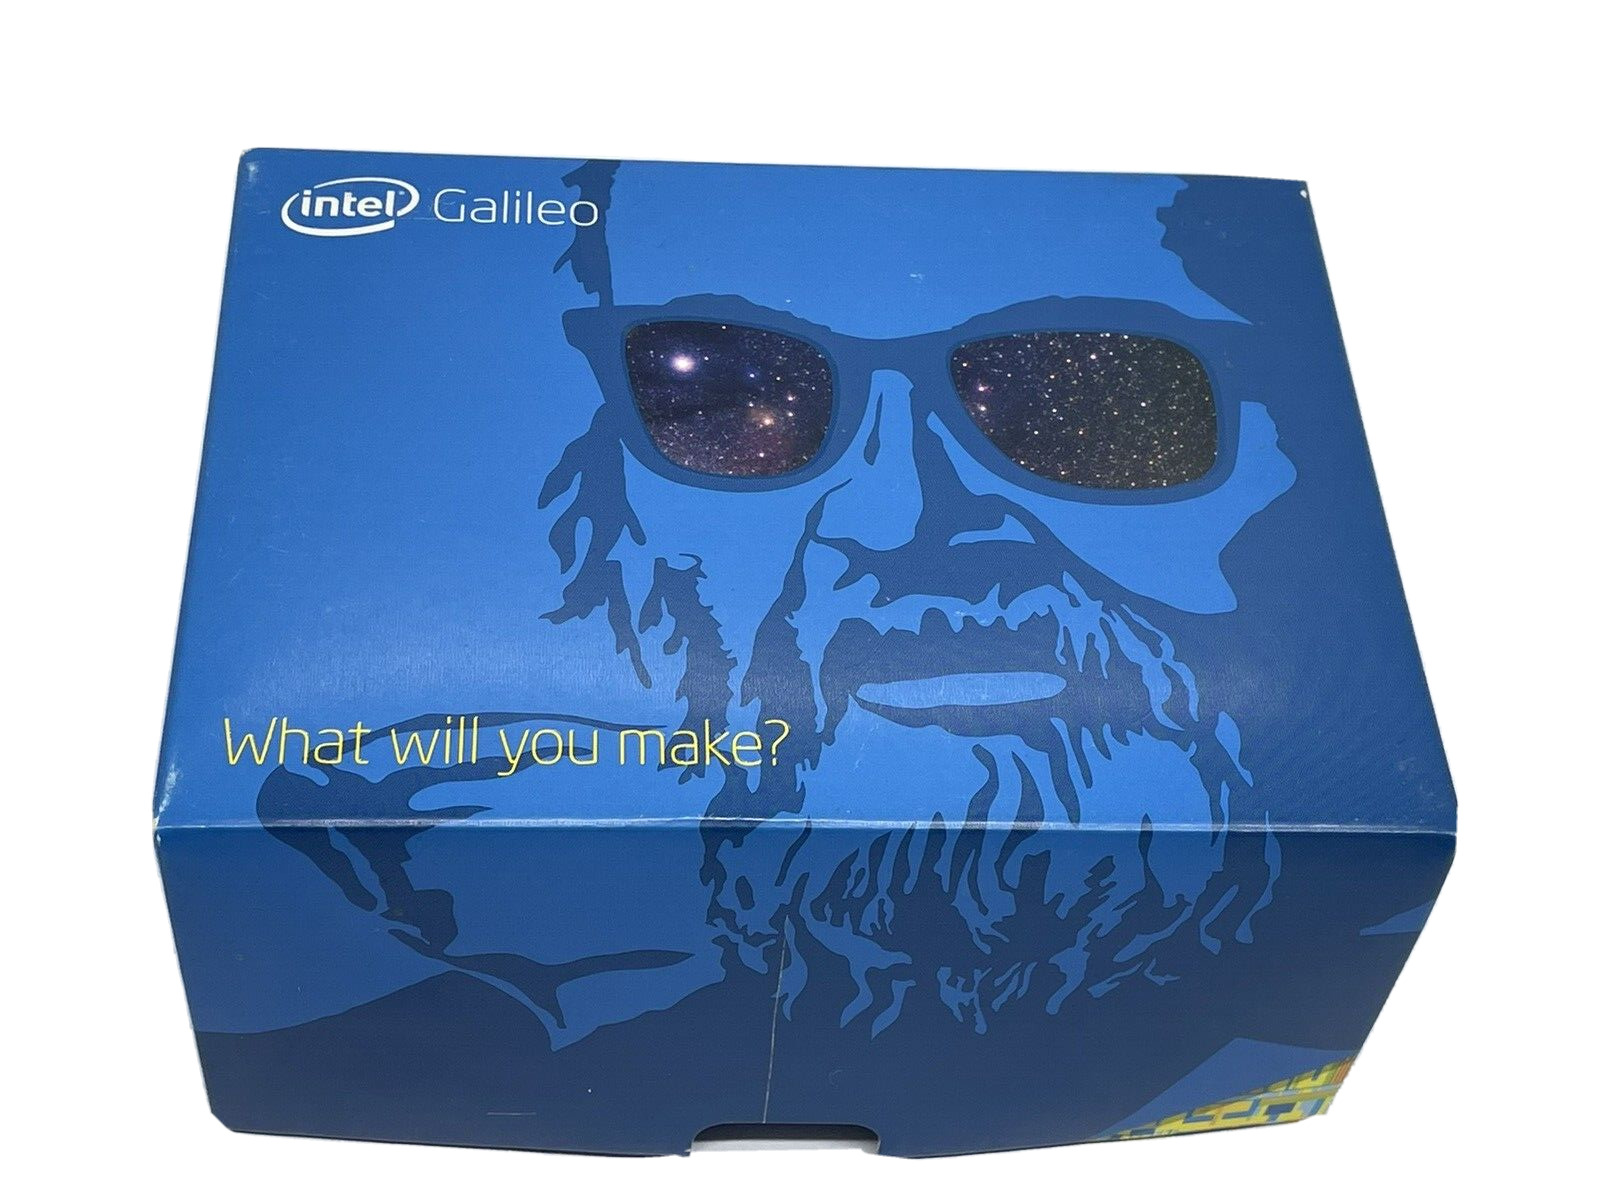 Intel Galileo 1st Generation Board - Galileo1 - New / Sealed